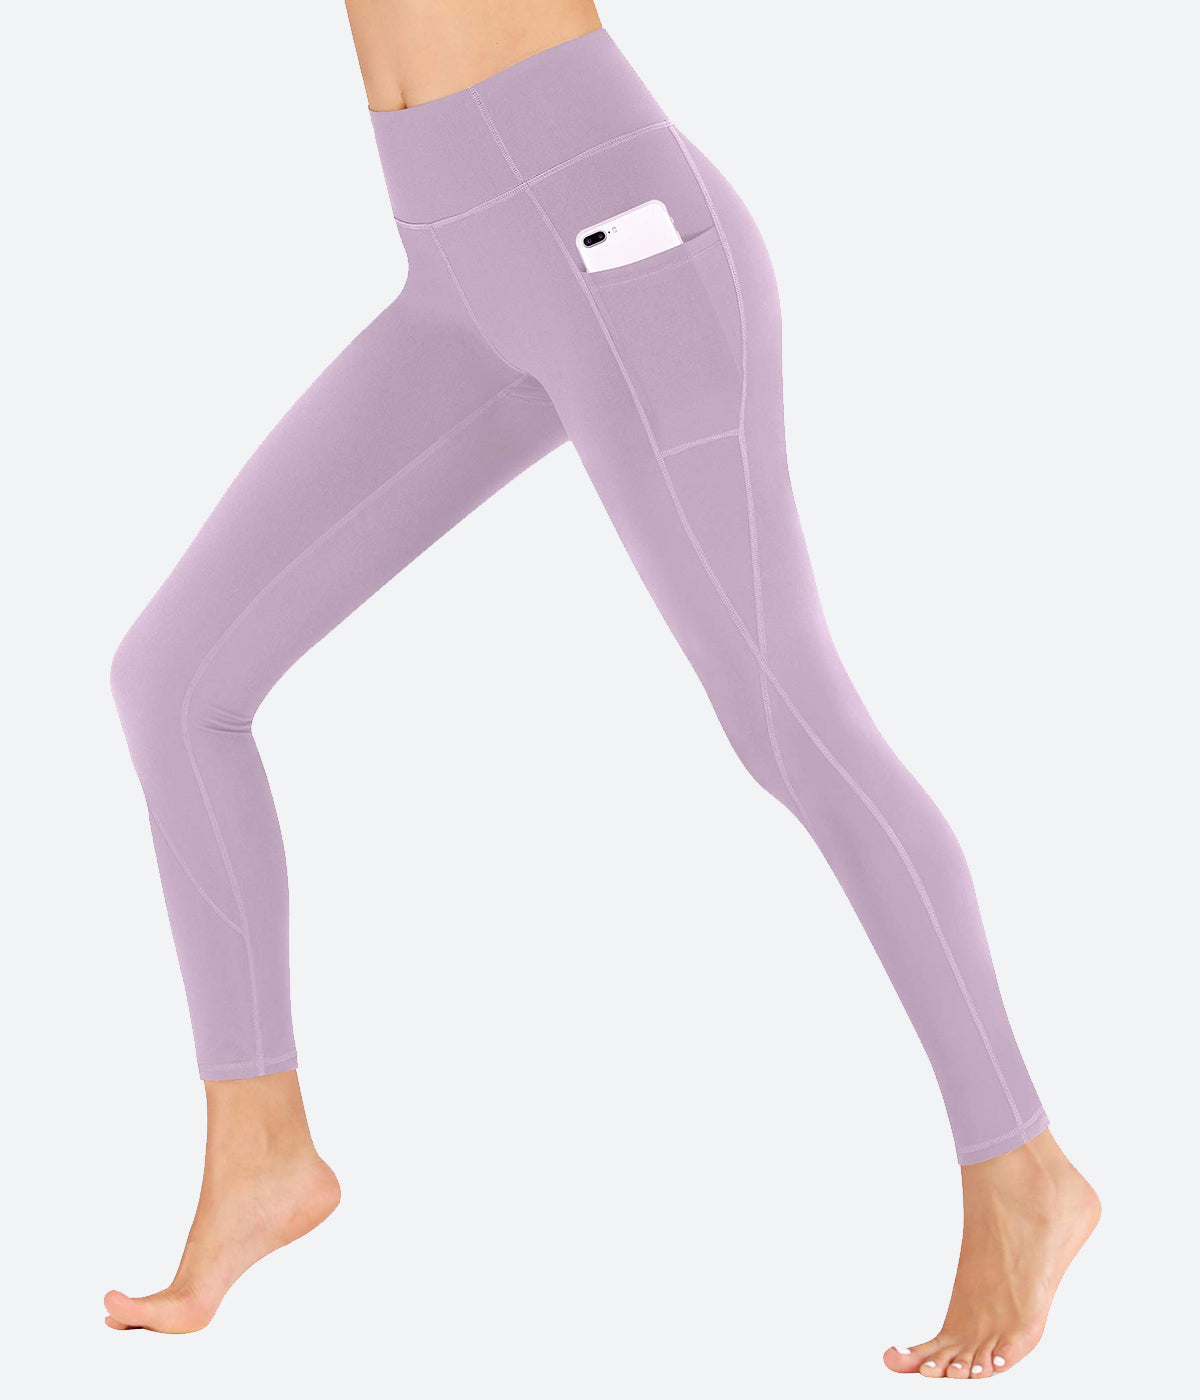 Kyodan Women's Yoga Leggings 25” Purple X-Small : Kyodan